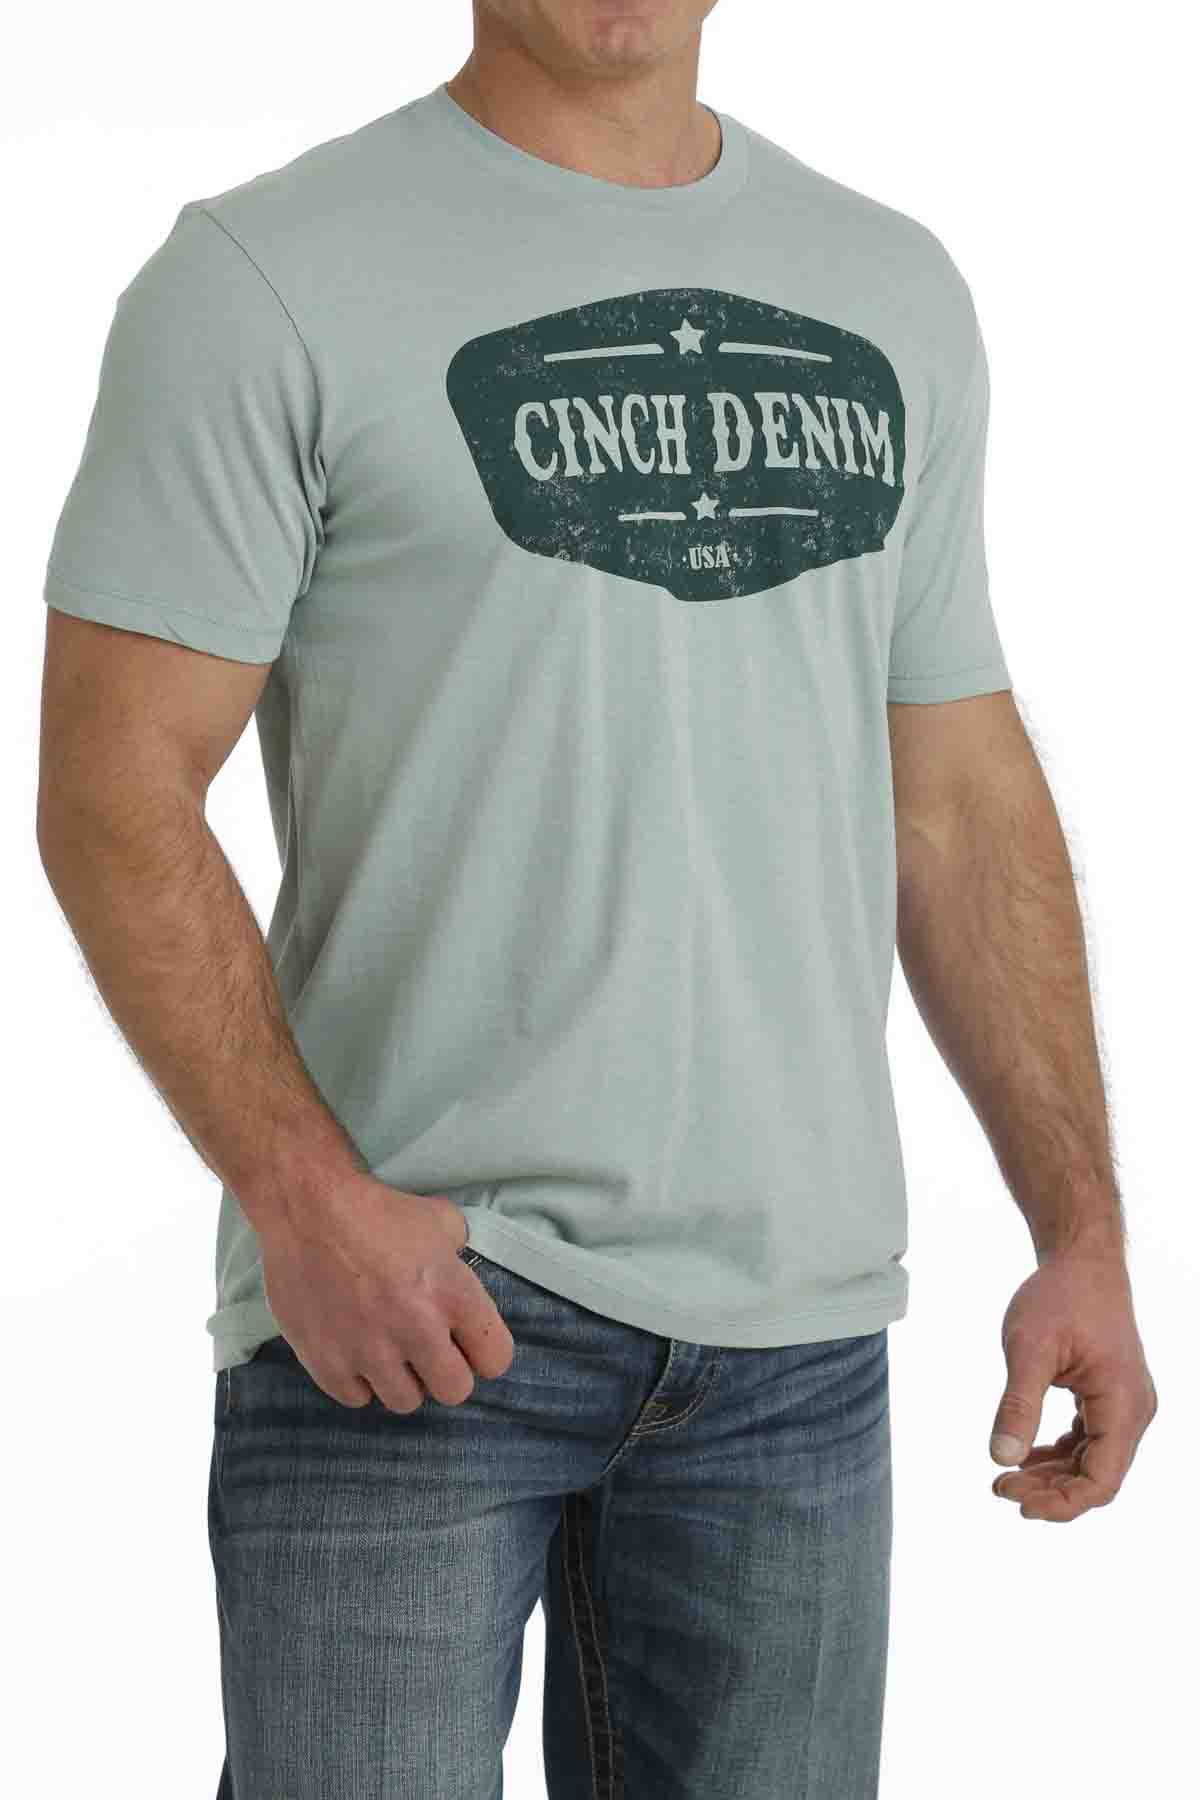 Cinch Denim USA Men's Short-Sleeve T-Shirt in Turquoise